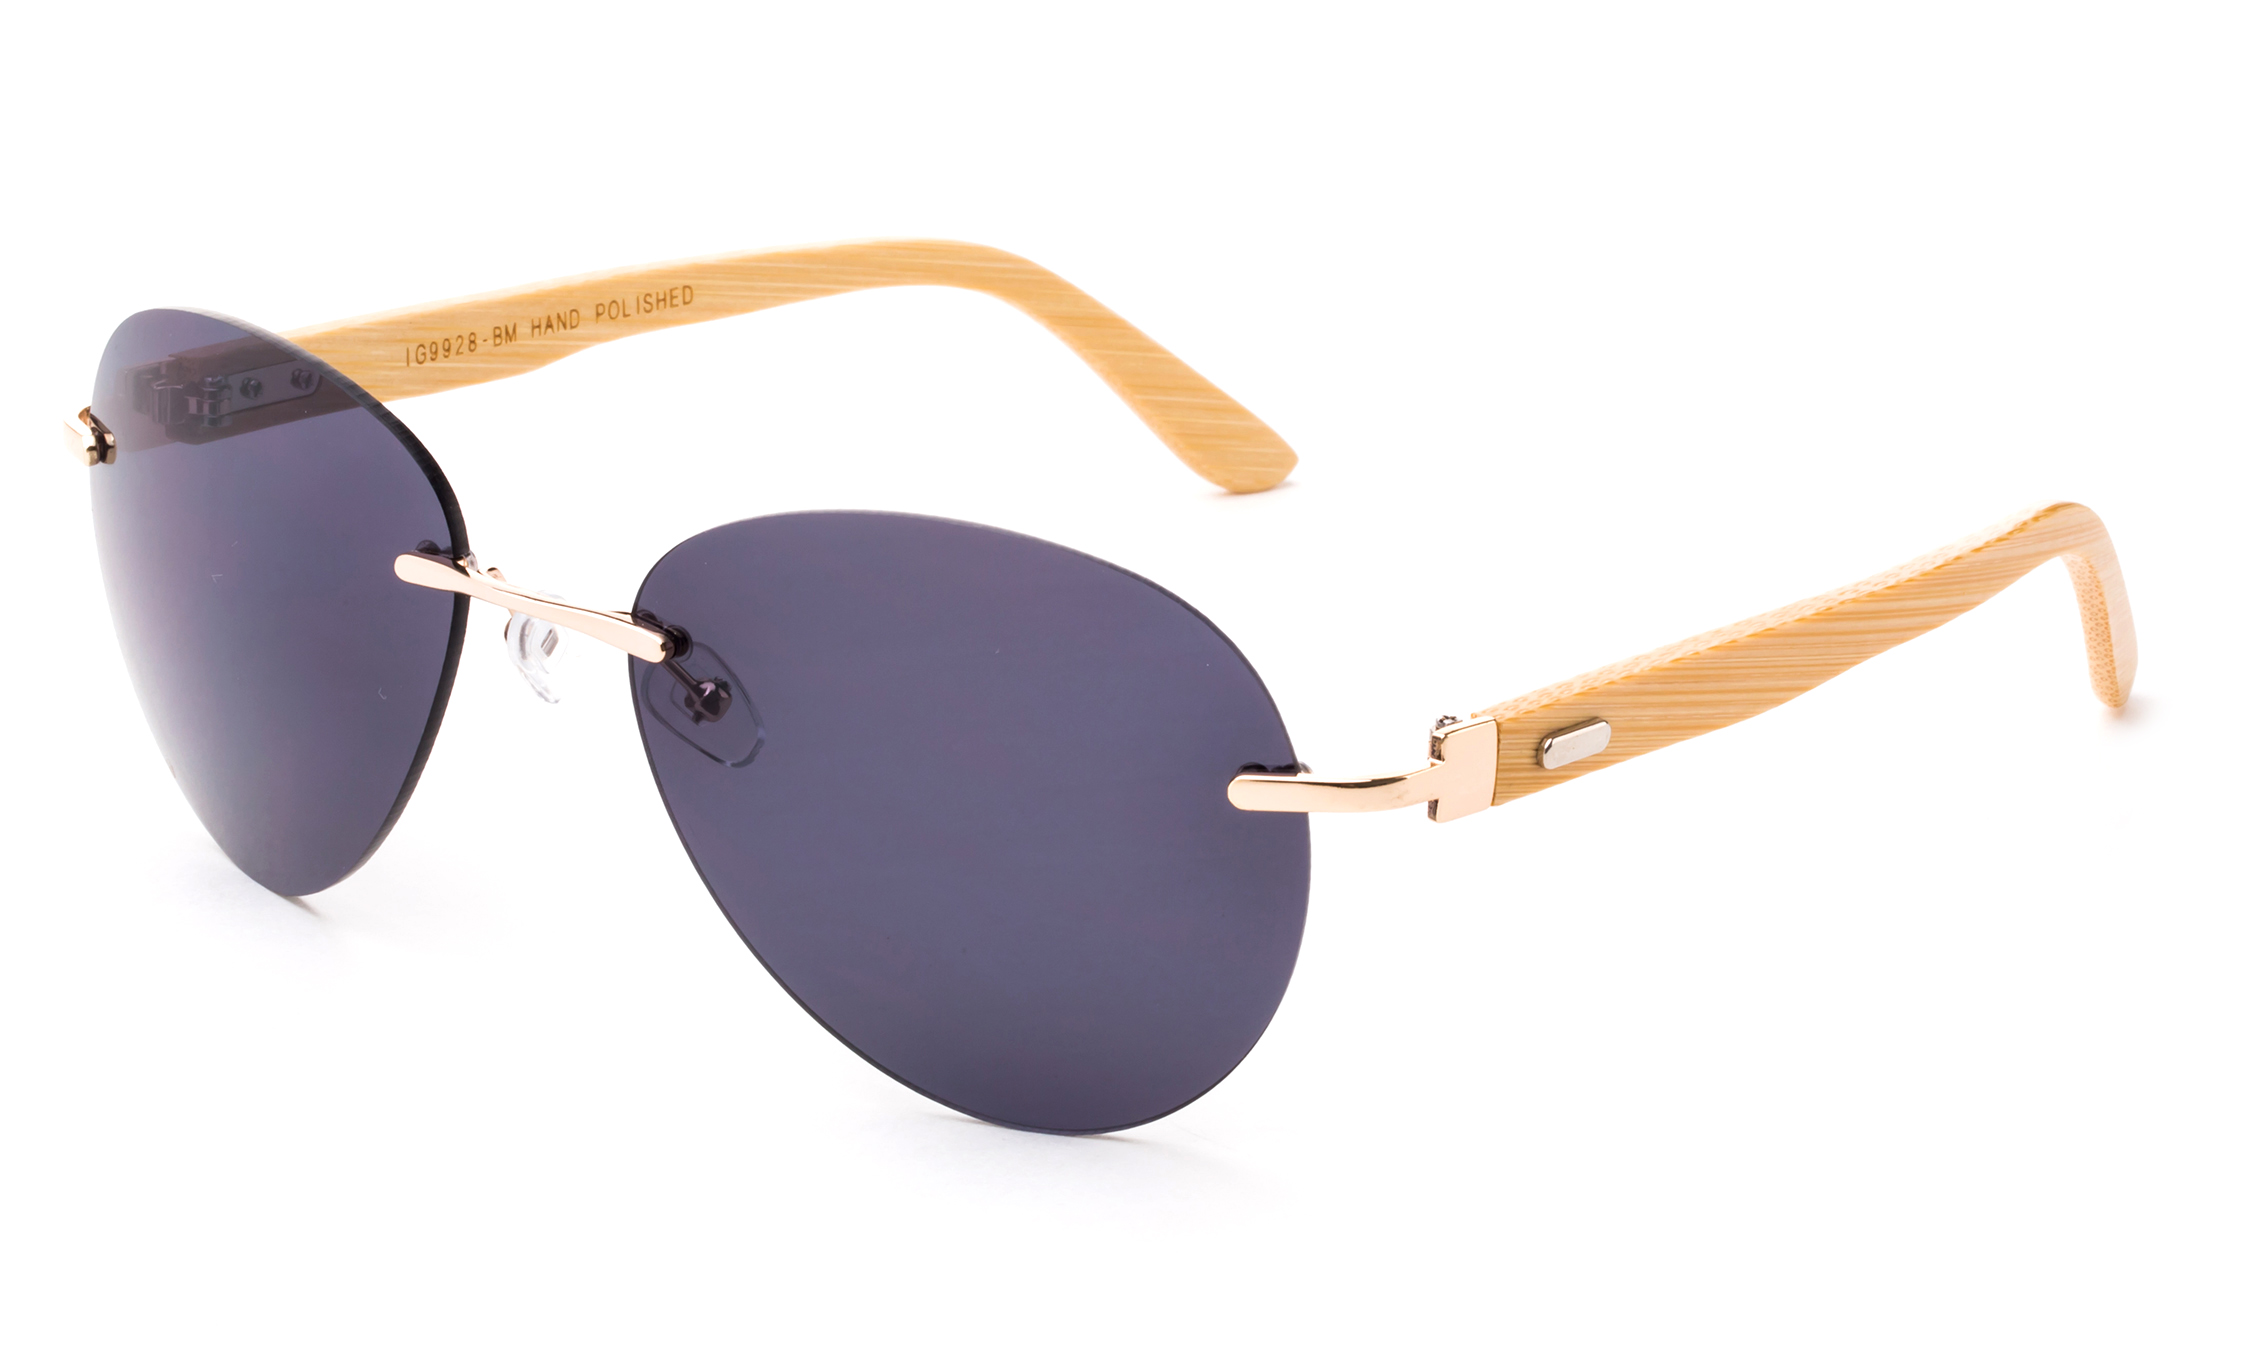 Newbee Fashion - Bamboo Arm Oversized Rimless Aviator Sunglasses with Flash Lens Bamboo Sunglasses for Men & Women - image 2 of 2